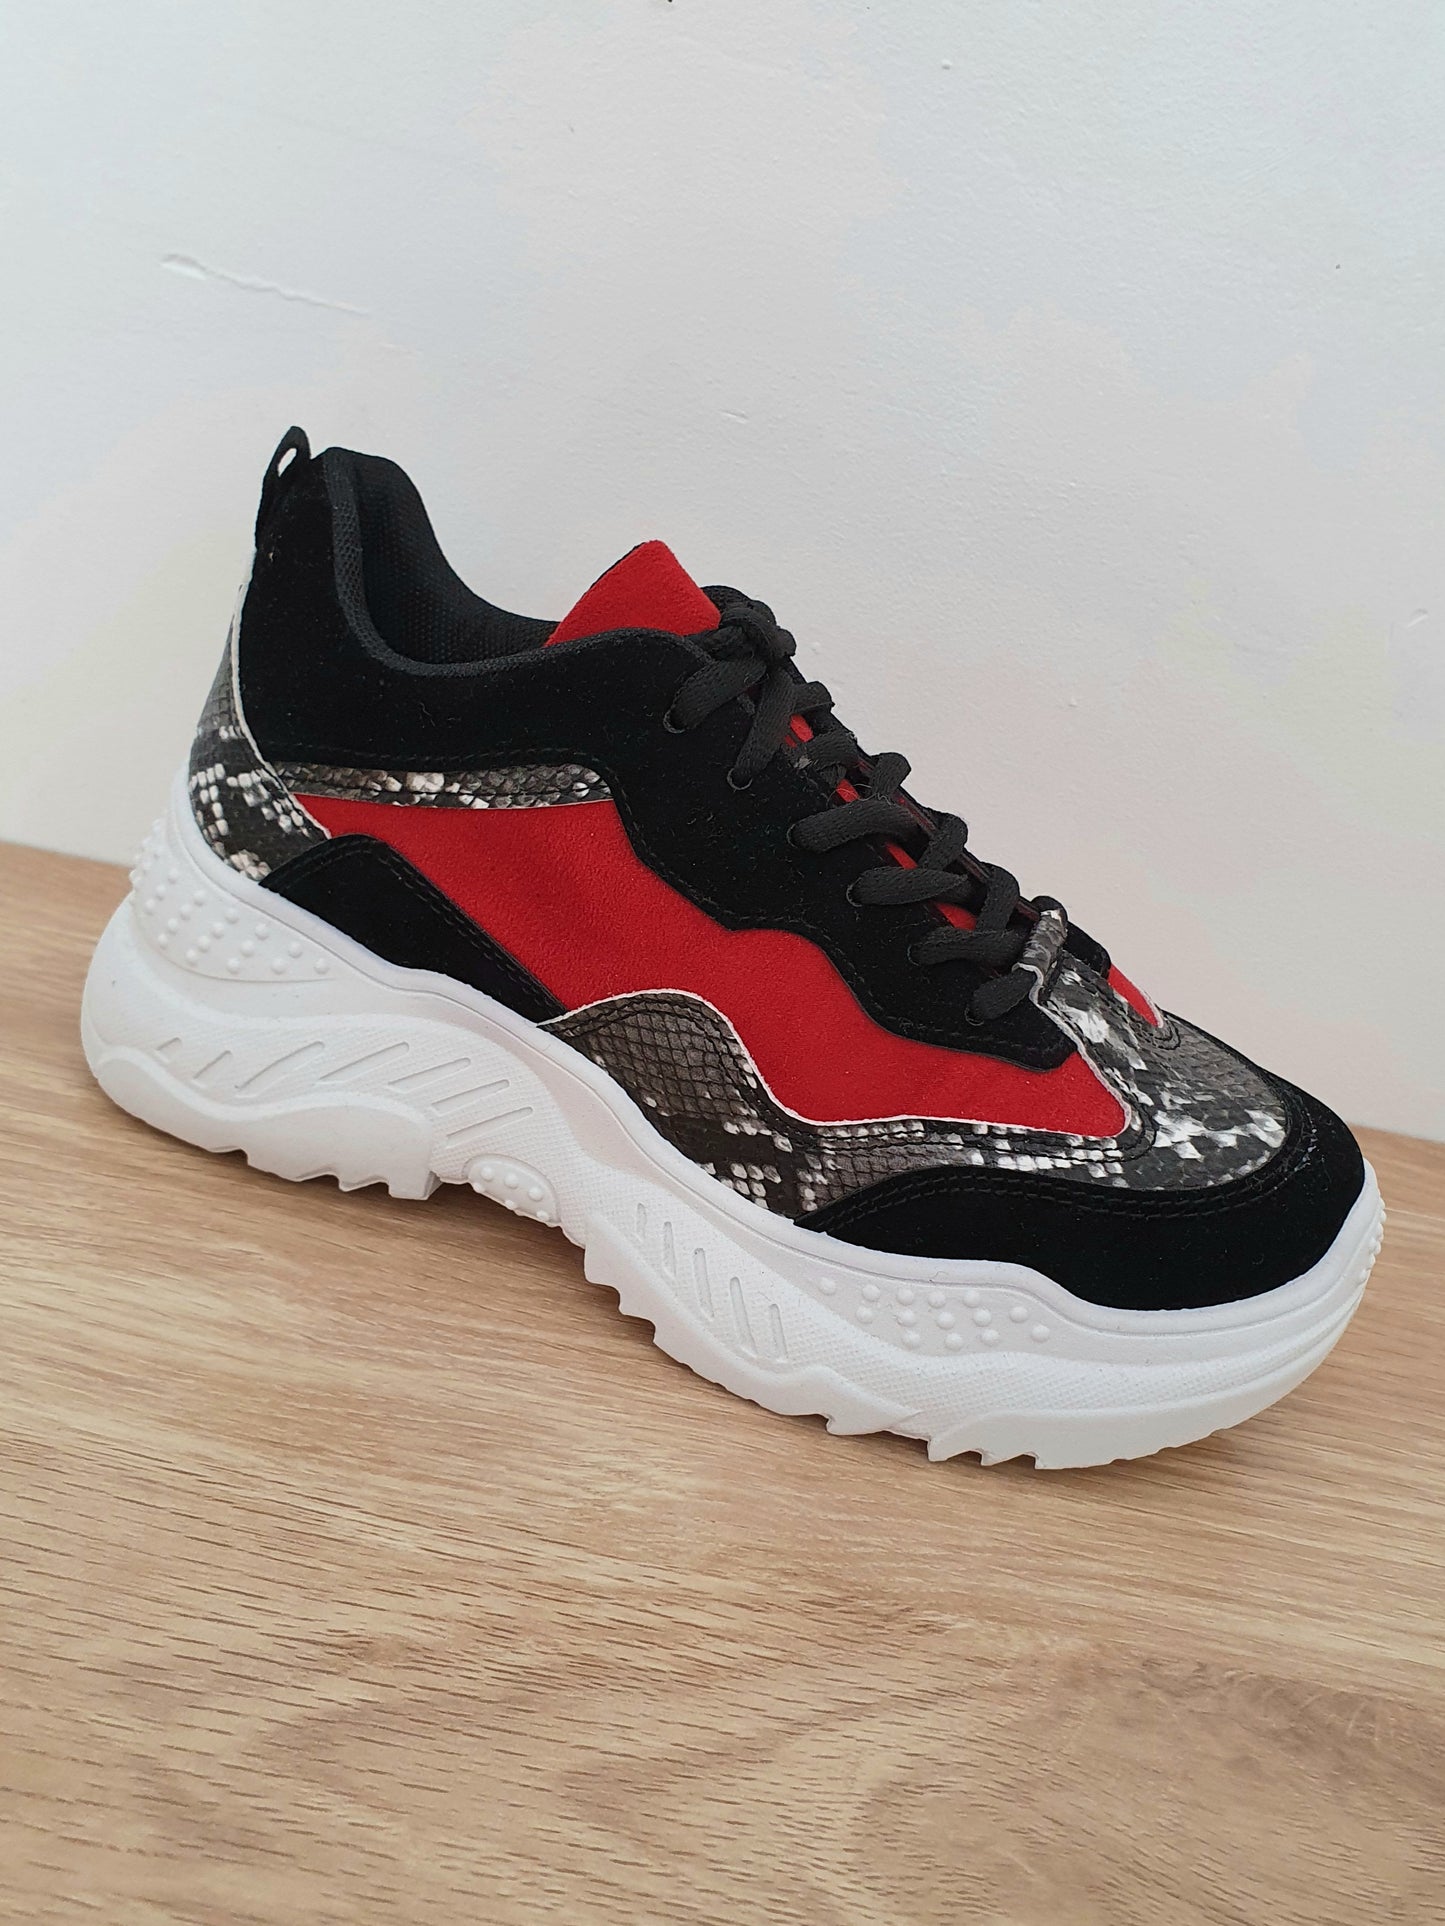 Baskets sneakers rouge & noir motif serpent